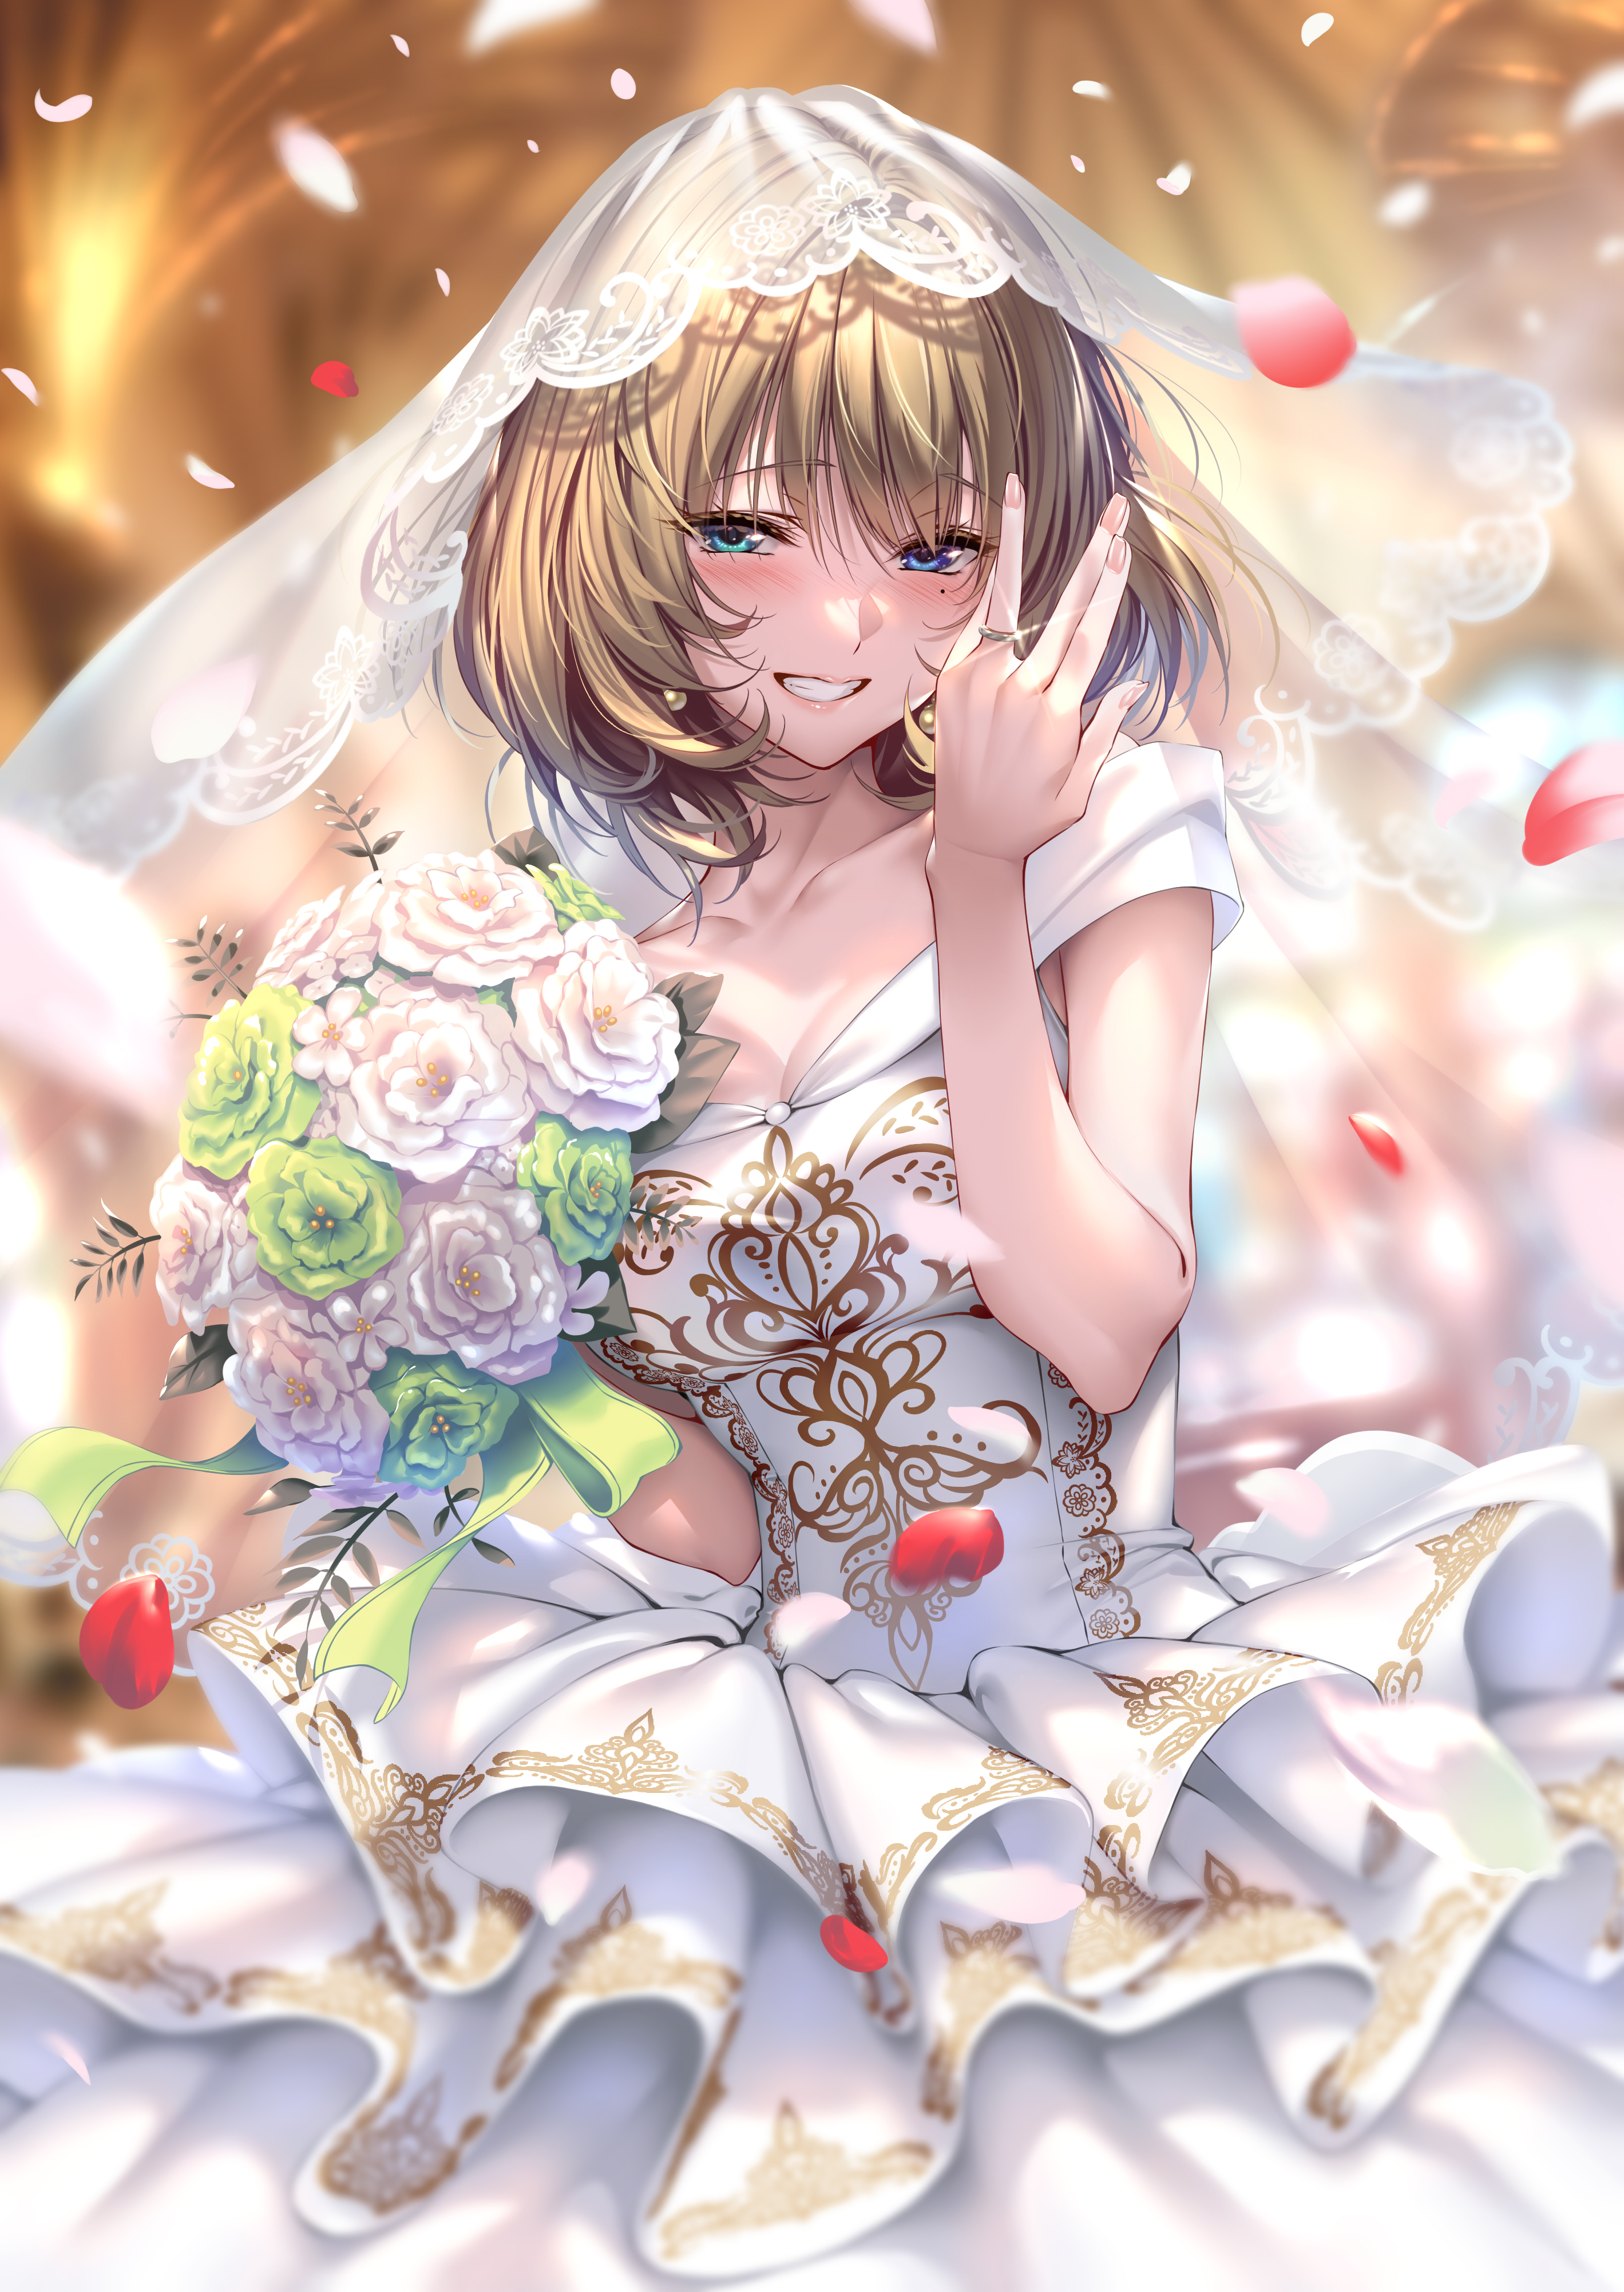 Anime Girls Anime Blonde Short Hair Blushing Blue Eyes Weddings Wedding Ring Veils Wedding Attire We 2838x4005